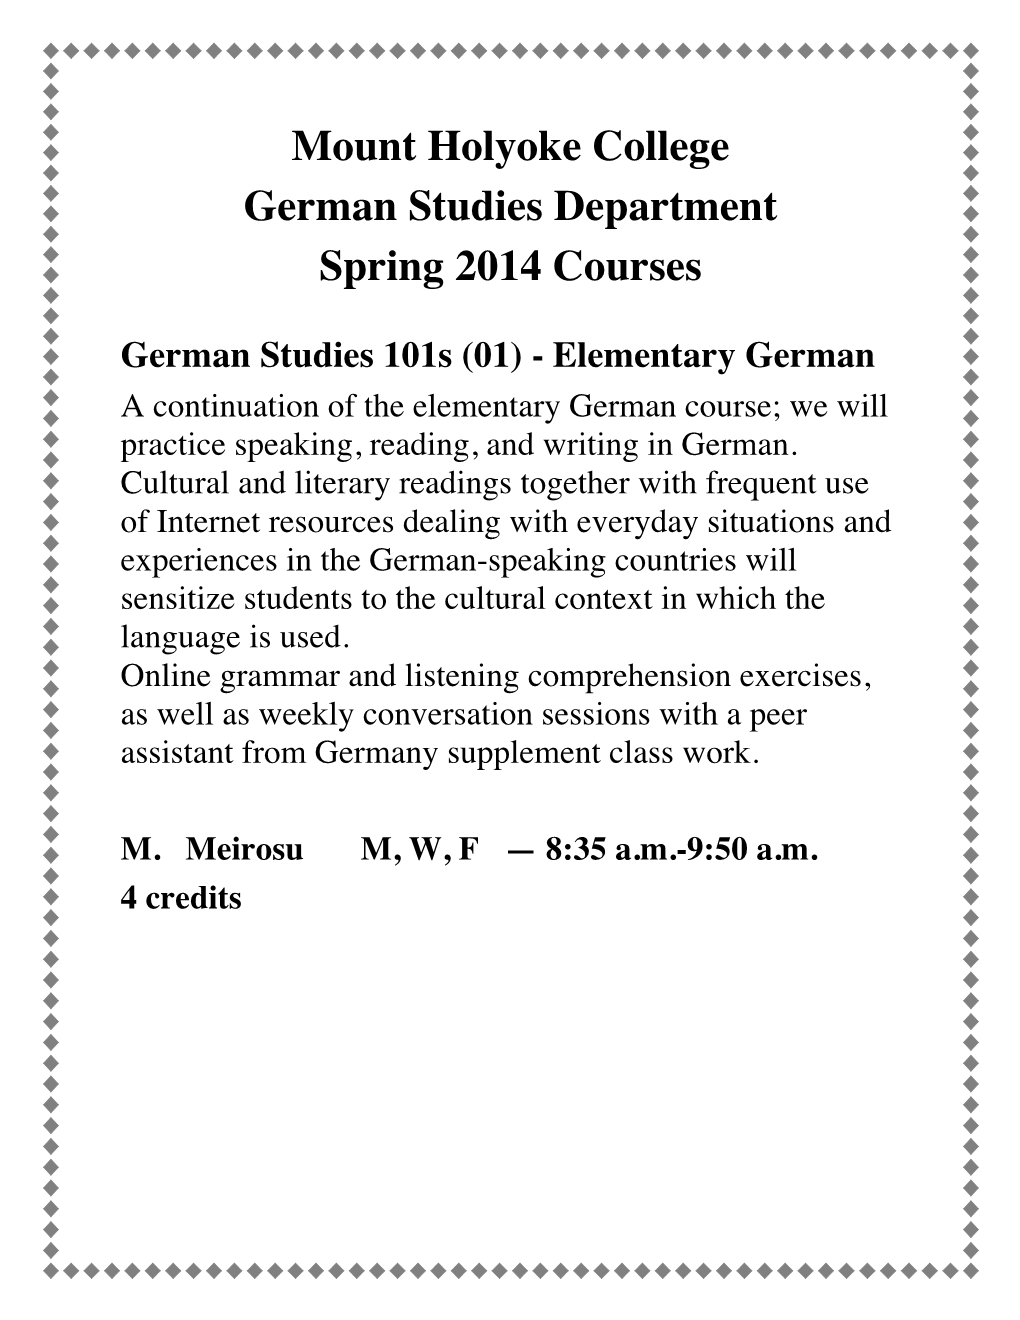 MHC German Studies Spring 2014 Courses